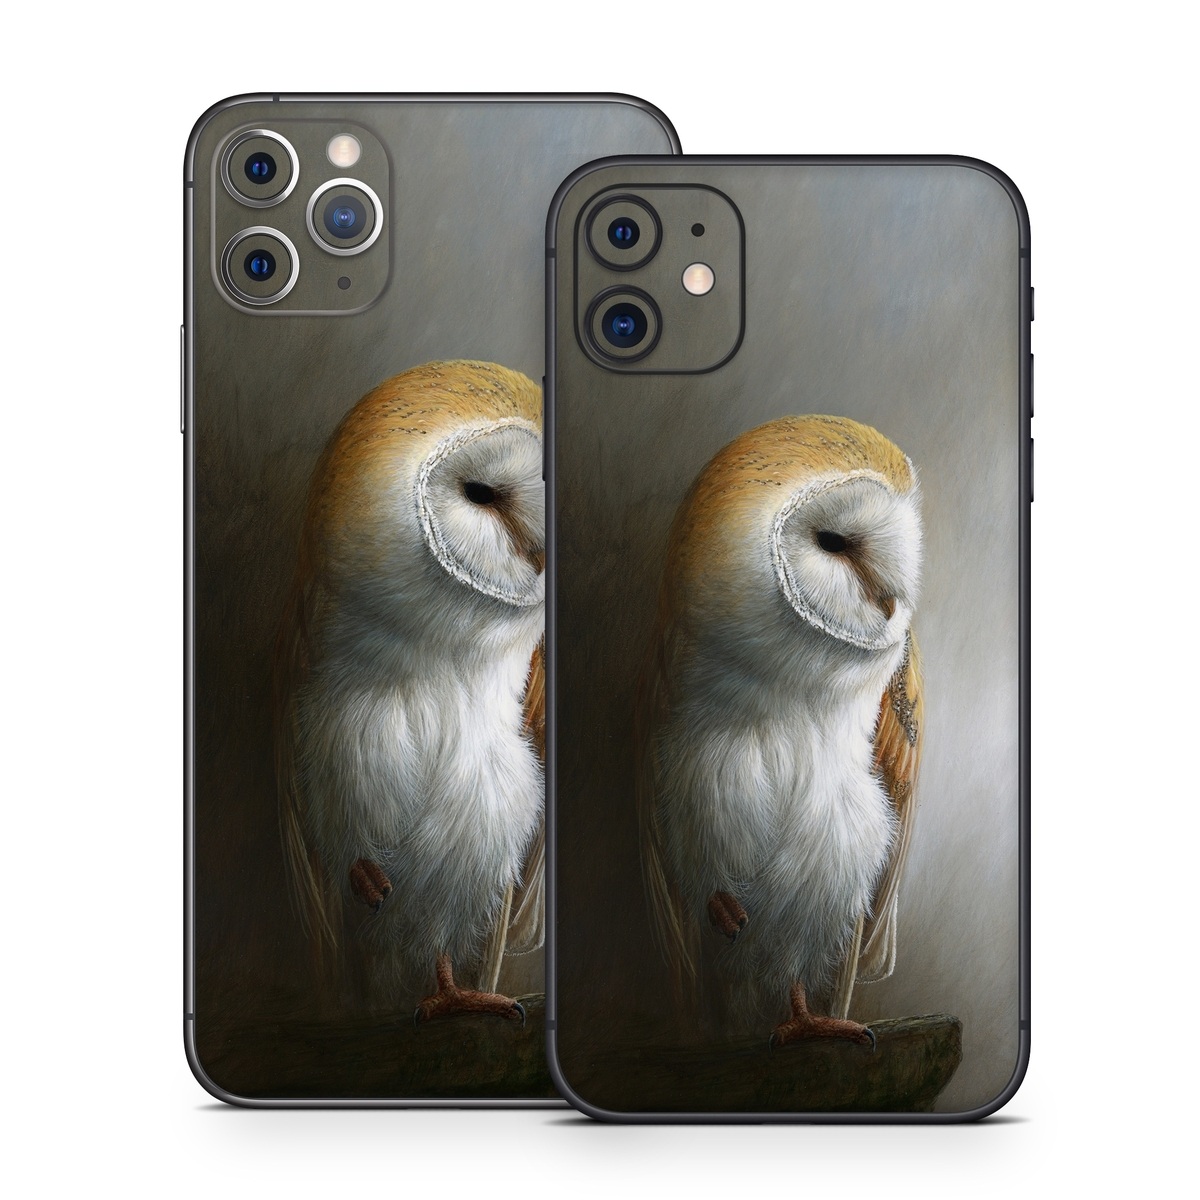 iPhone 11 Series Skin design of Barn owl, Owl, Bird, Bird of prey, Beak, Wildlife, with yellow, white, orange, brown colors